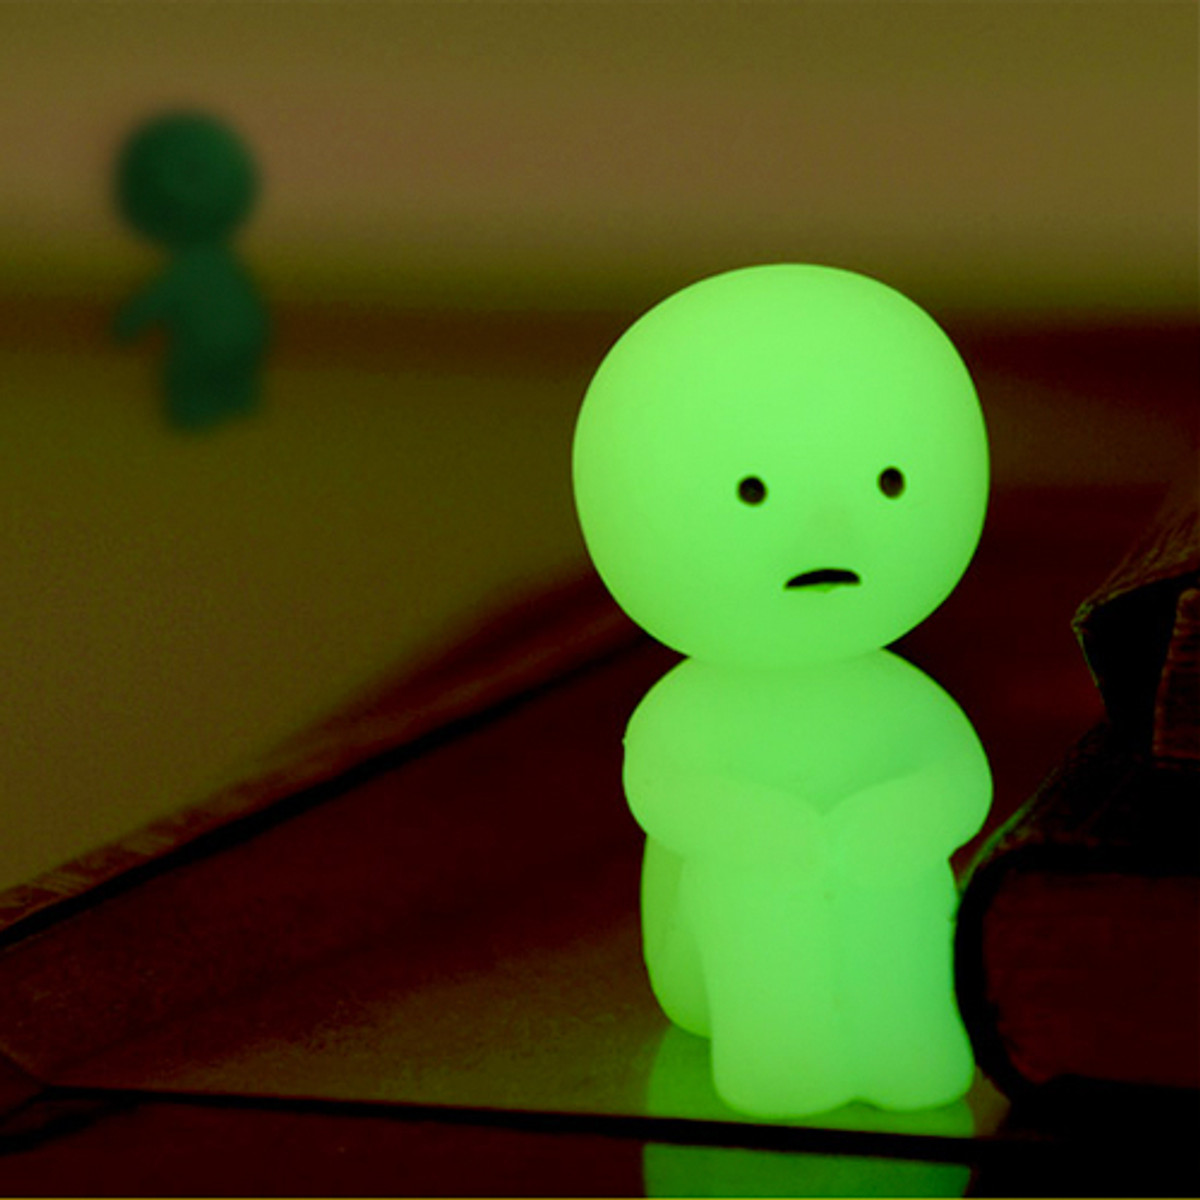 Smiski Collectable Mini Glow-In-The-Dark Figurines